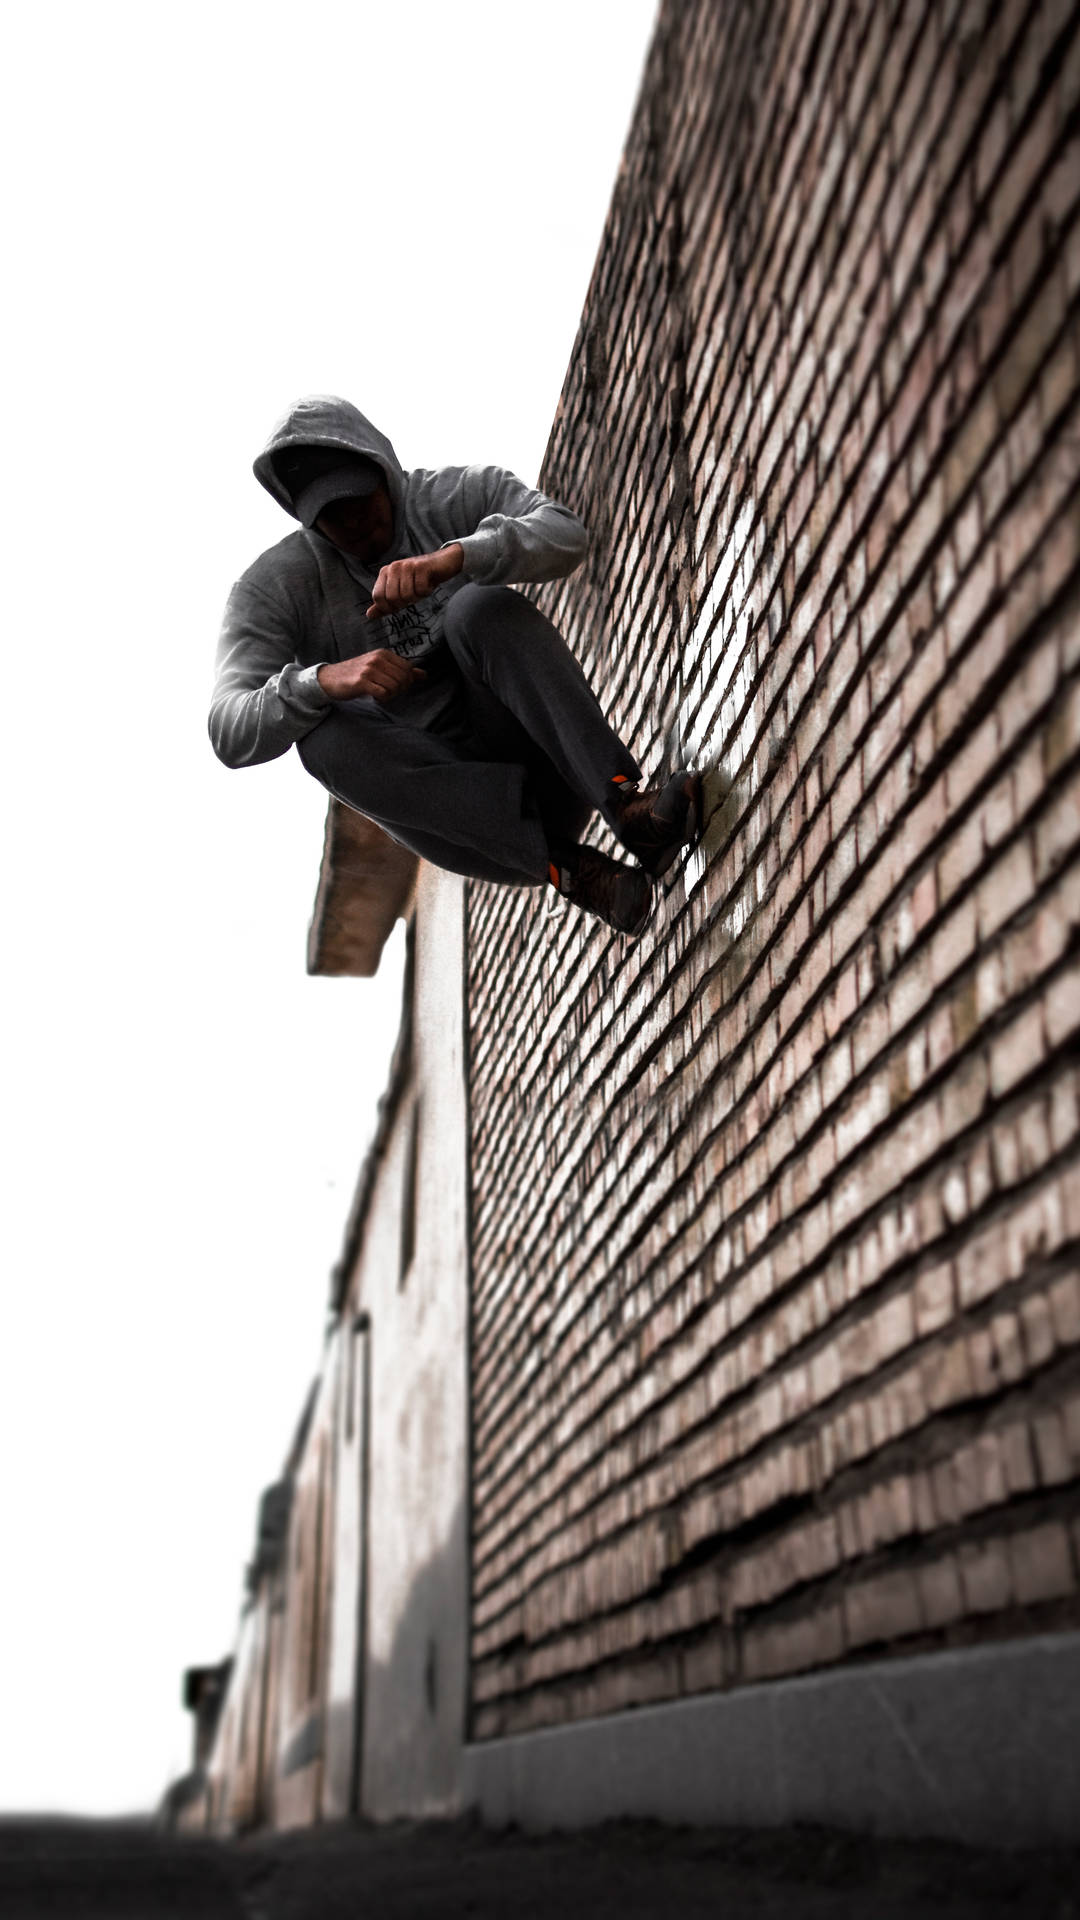 Parkour Stunt On Brick Wall Background